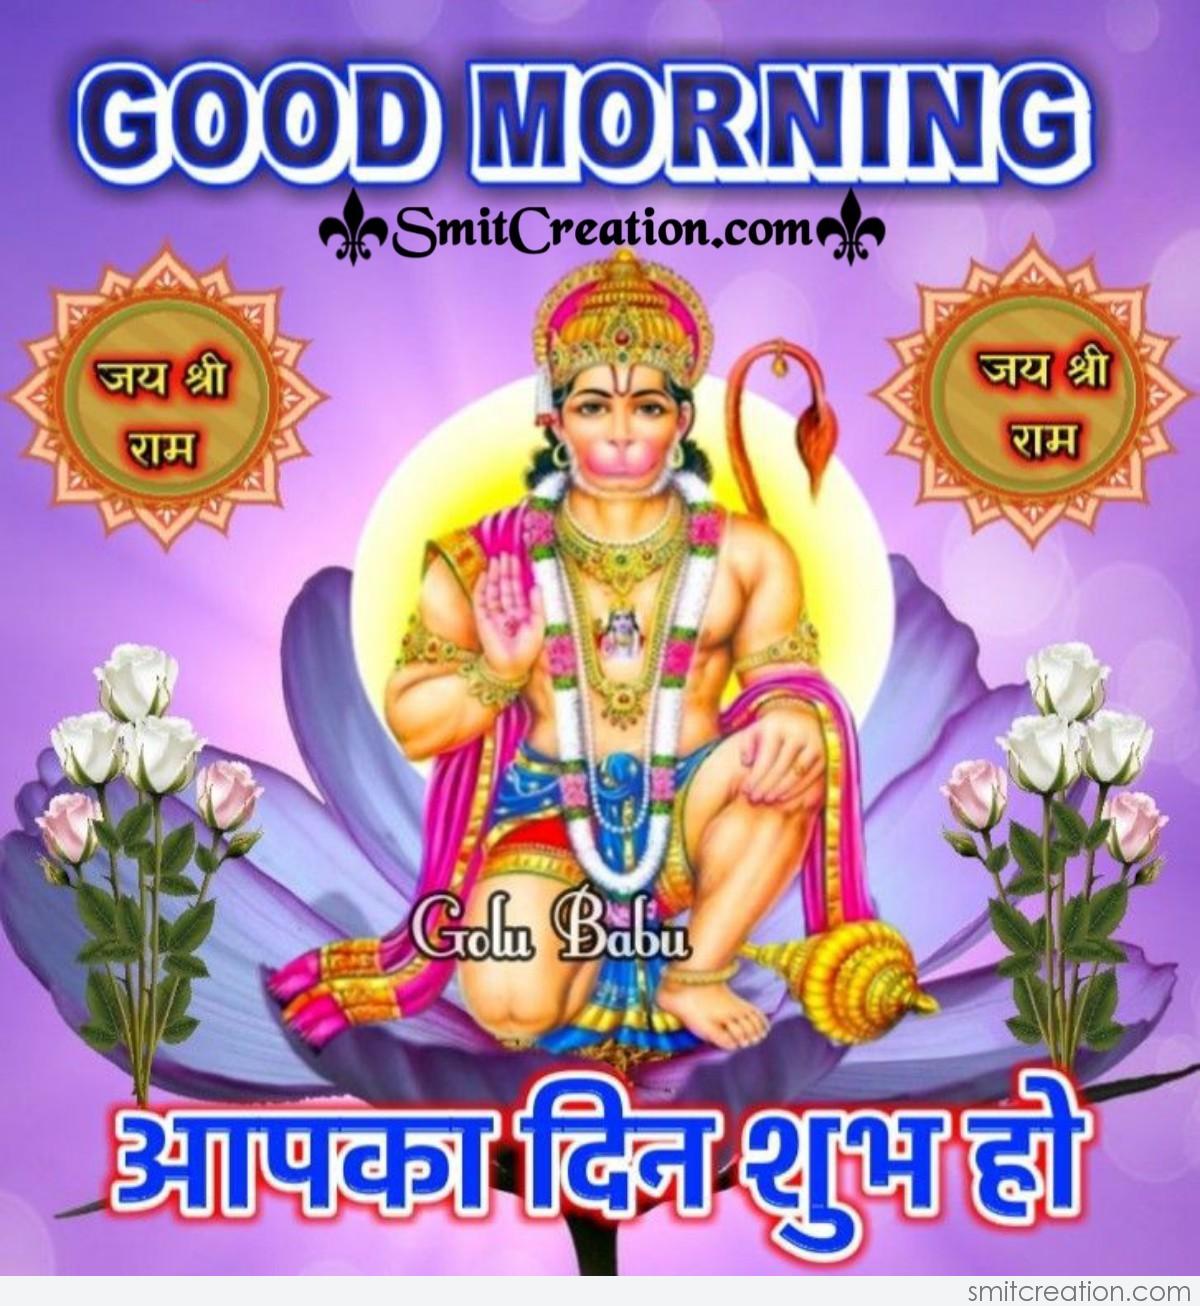 Good Morning Aapka Din Shubh Ho - SmitCreation.com